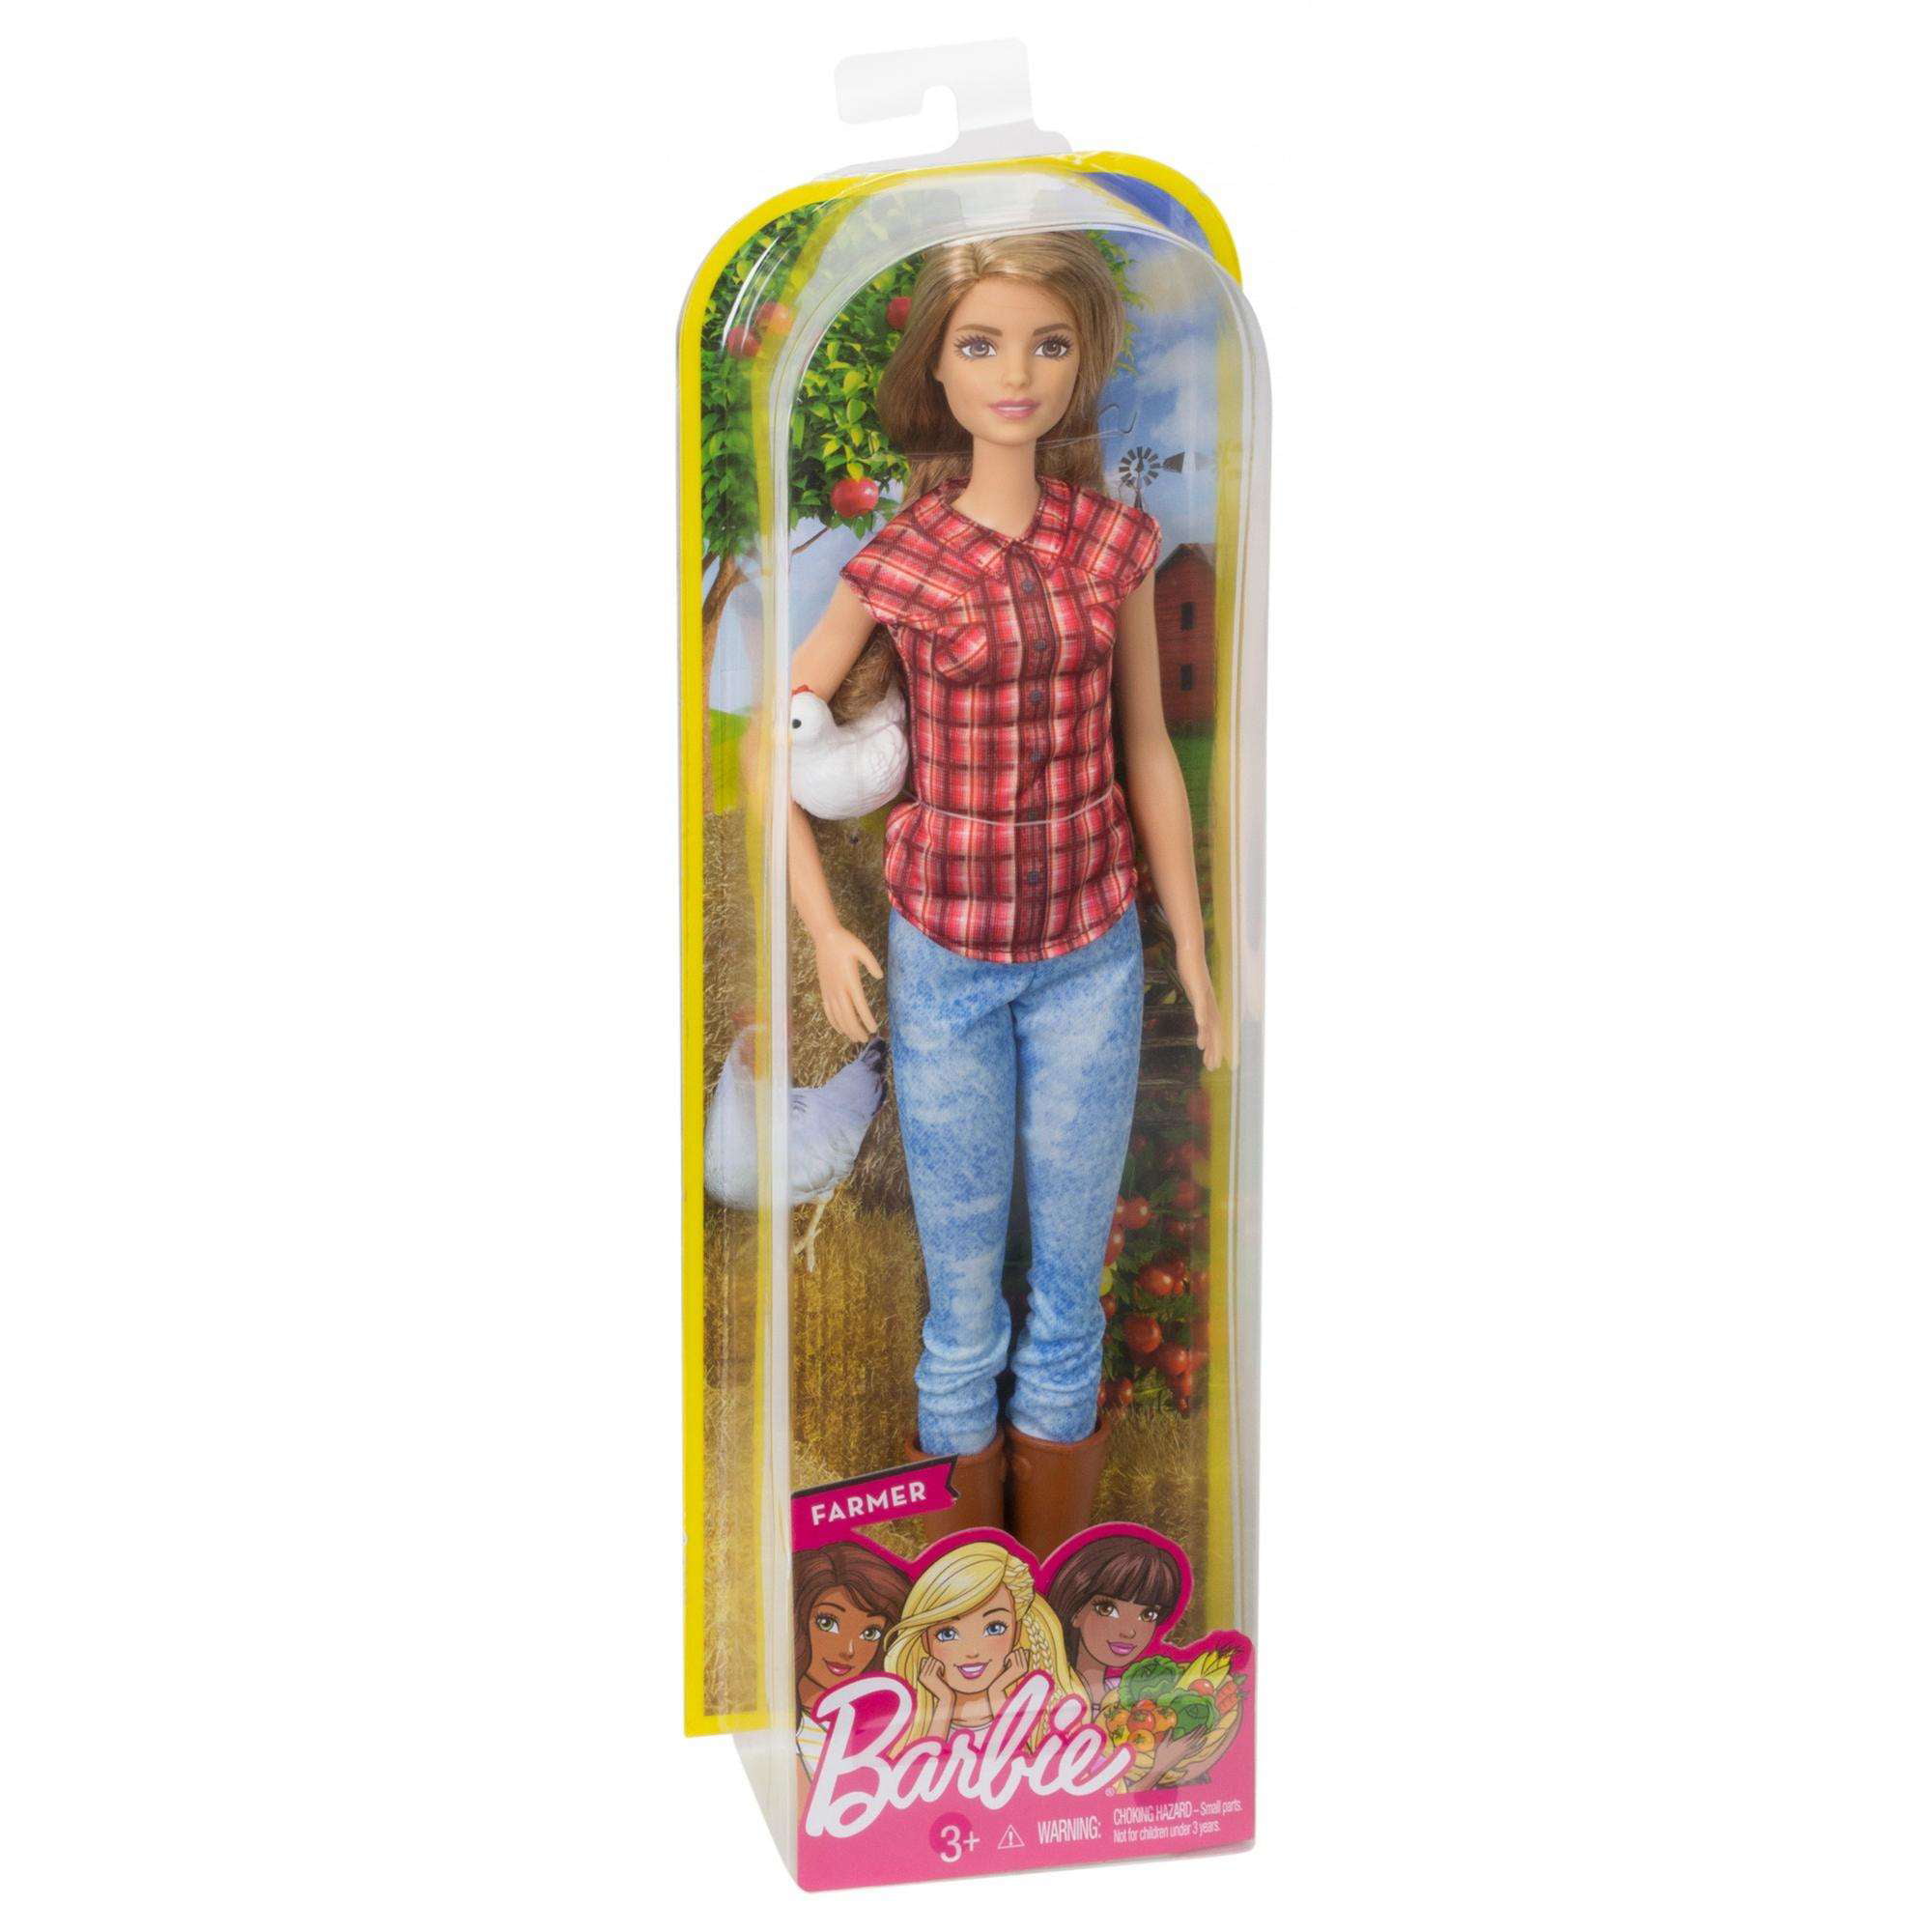 chicken farmer barbie girl